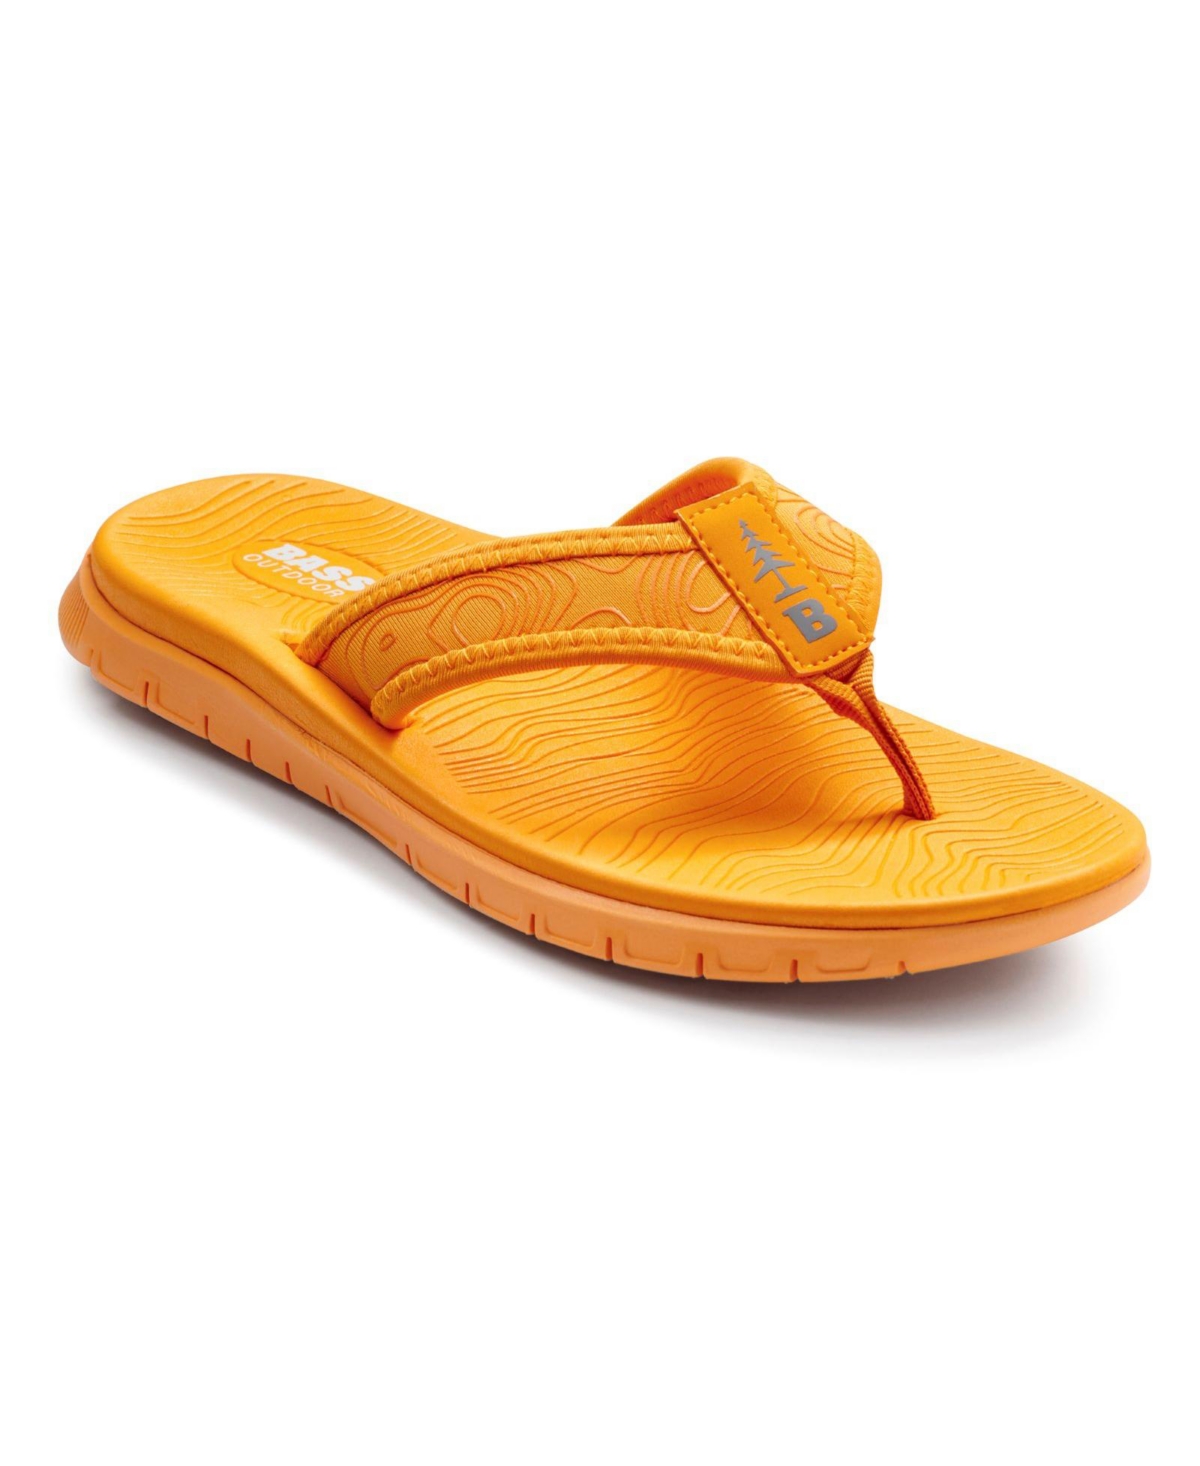 Women's Topo Thong Sandal Hiking Shoe - Flame orange